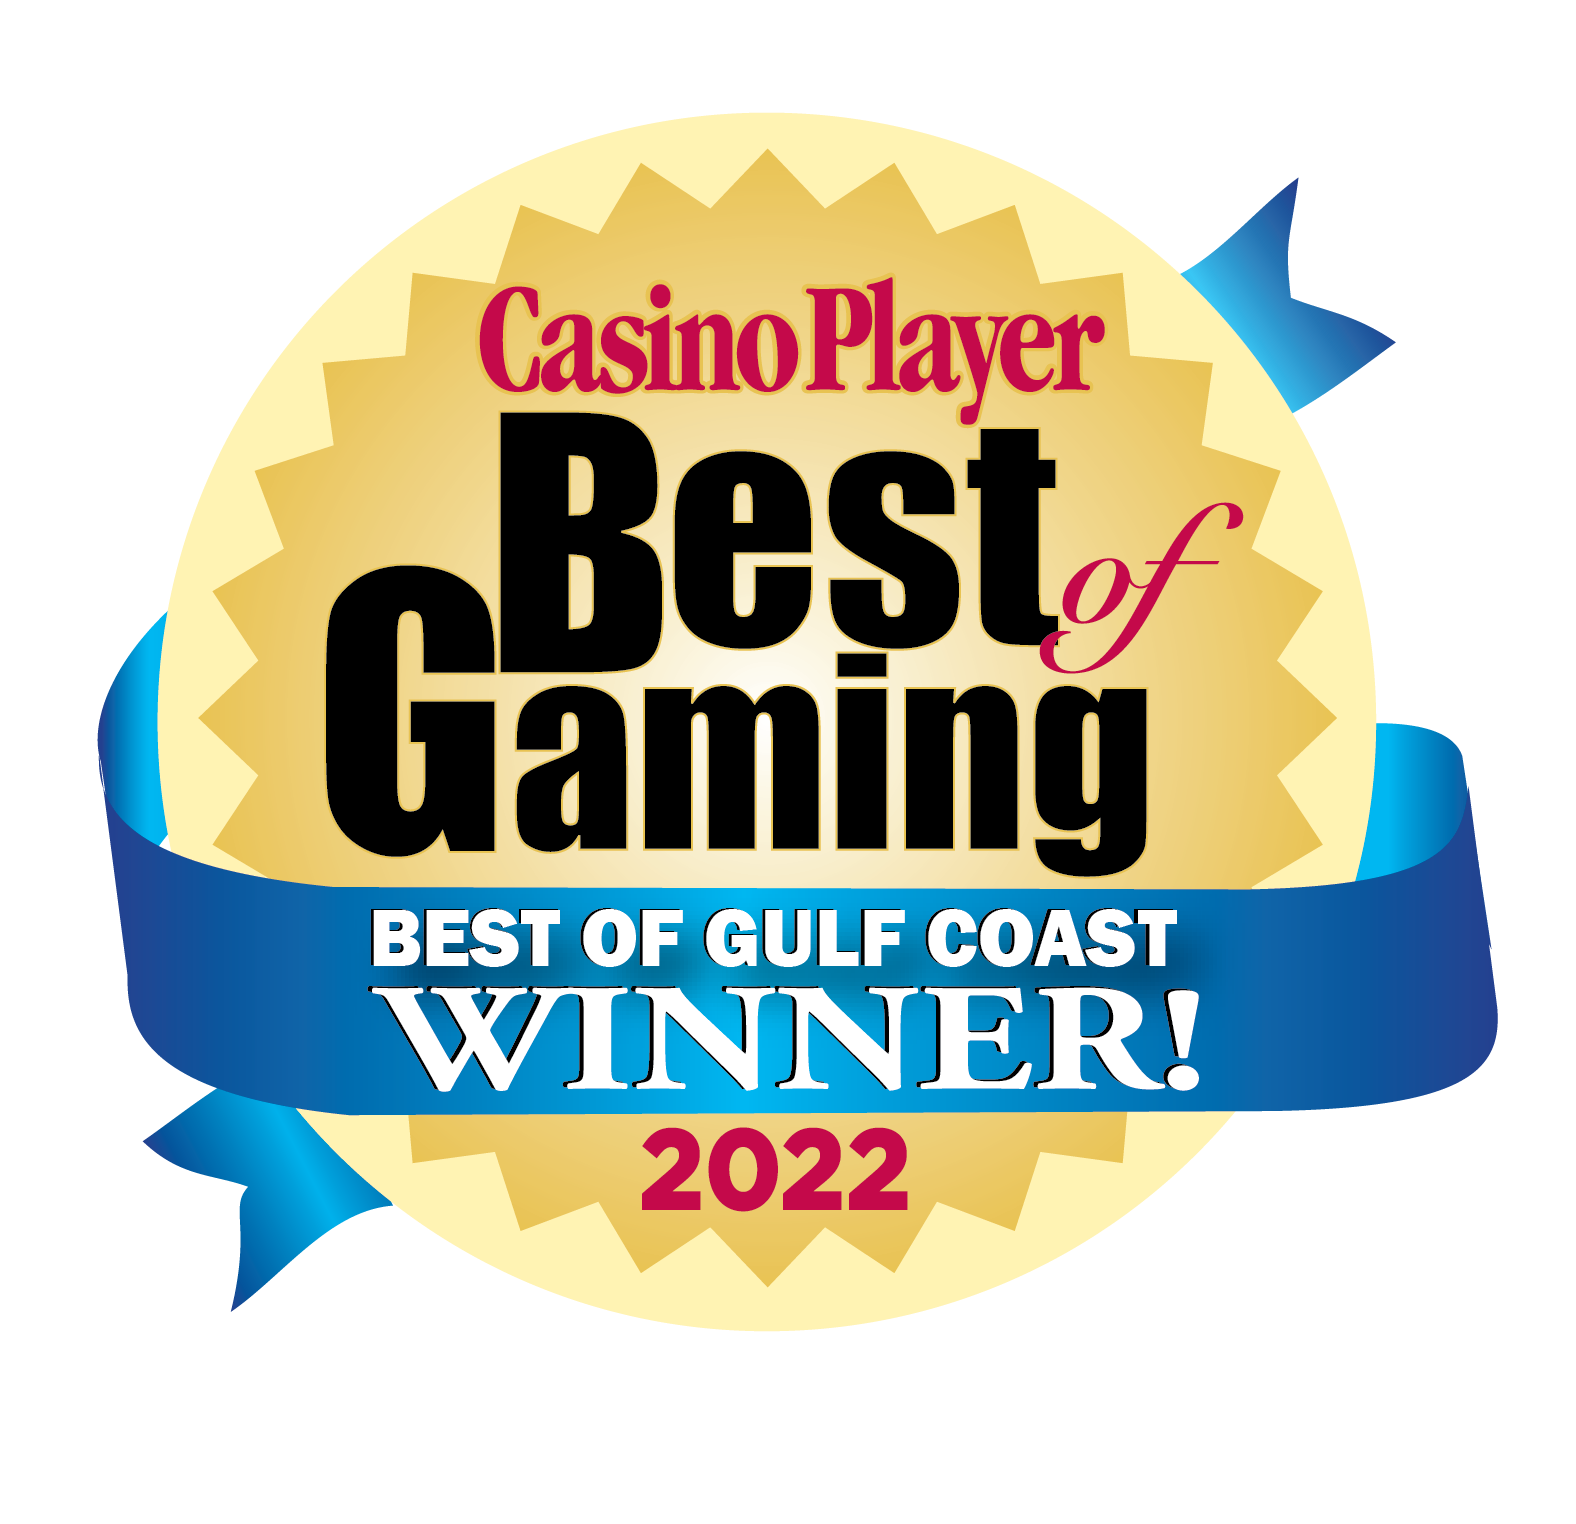 Casino Player Best of Gaming Winner of 2022 at Scarlet Pearl Casino Resort